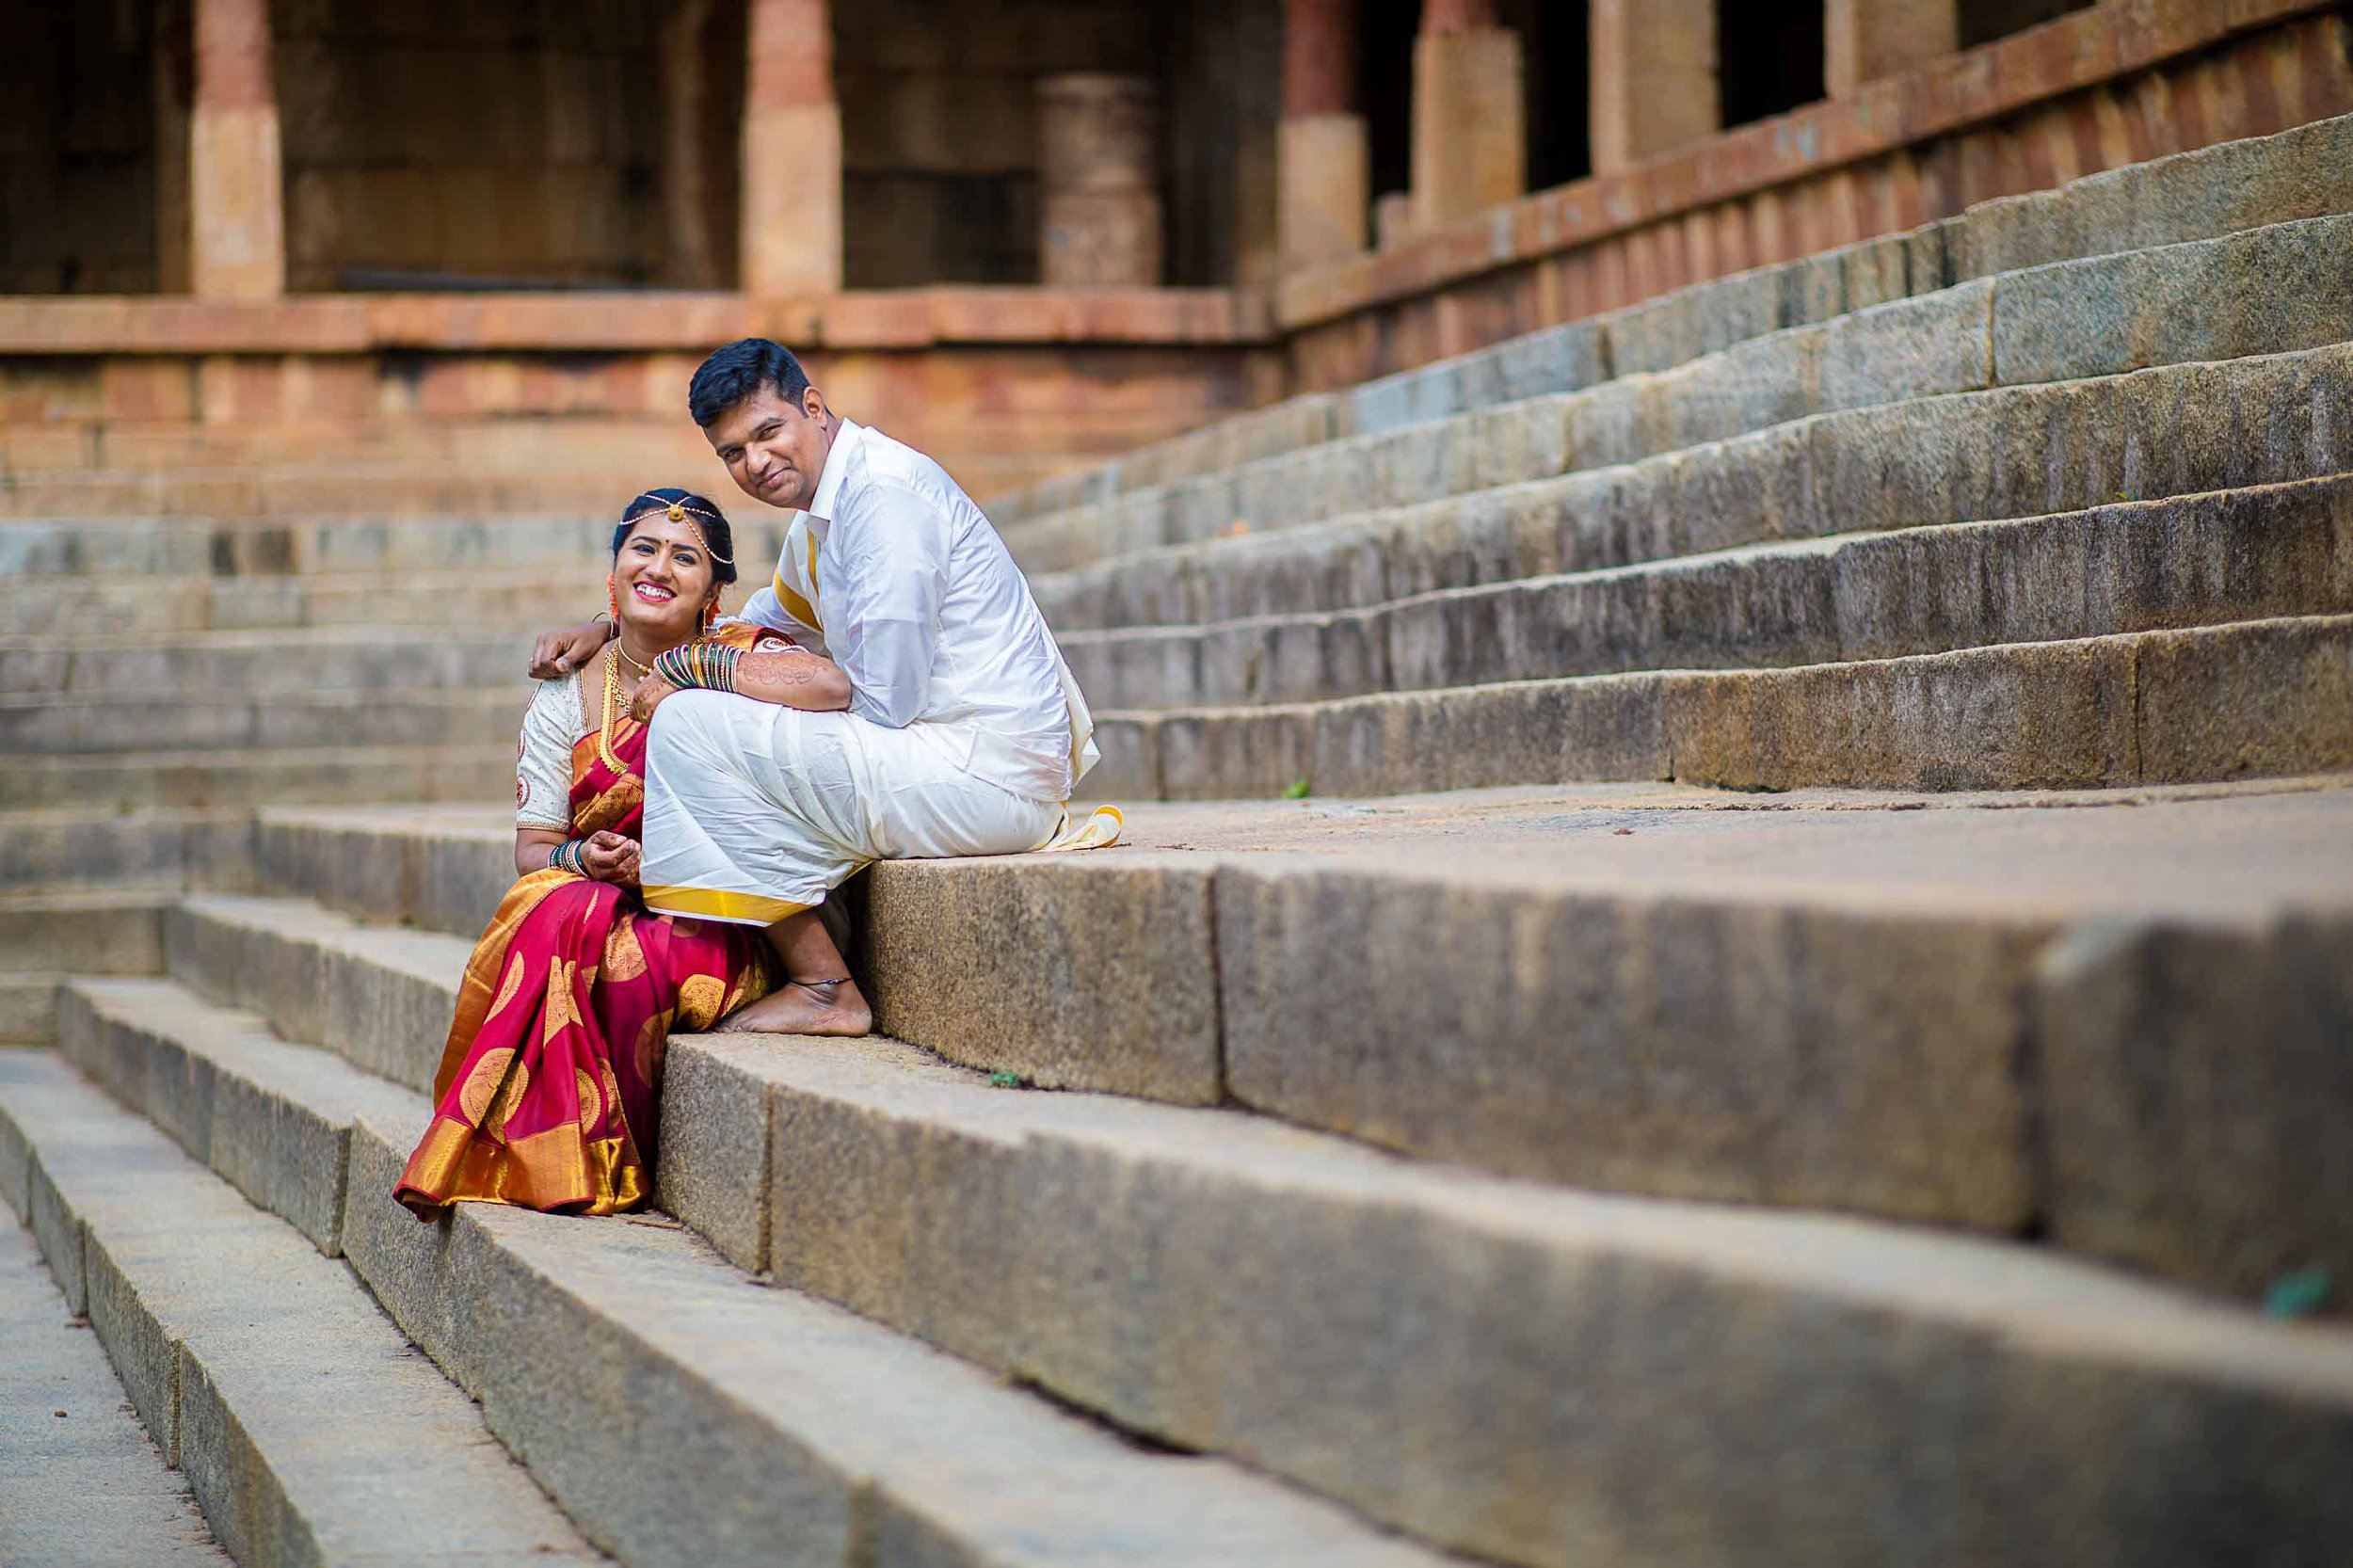 Pixel-Chronicles-Basavaraj_Pooja-bhoganandishwara-temple-Kalyani-Candid-Wedding-Photoshoot-South-Indian-Wedding-Couple-Photoshoot-28.jpg